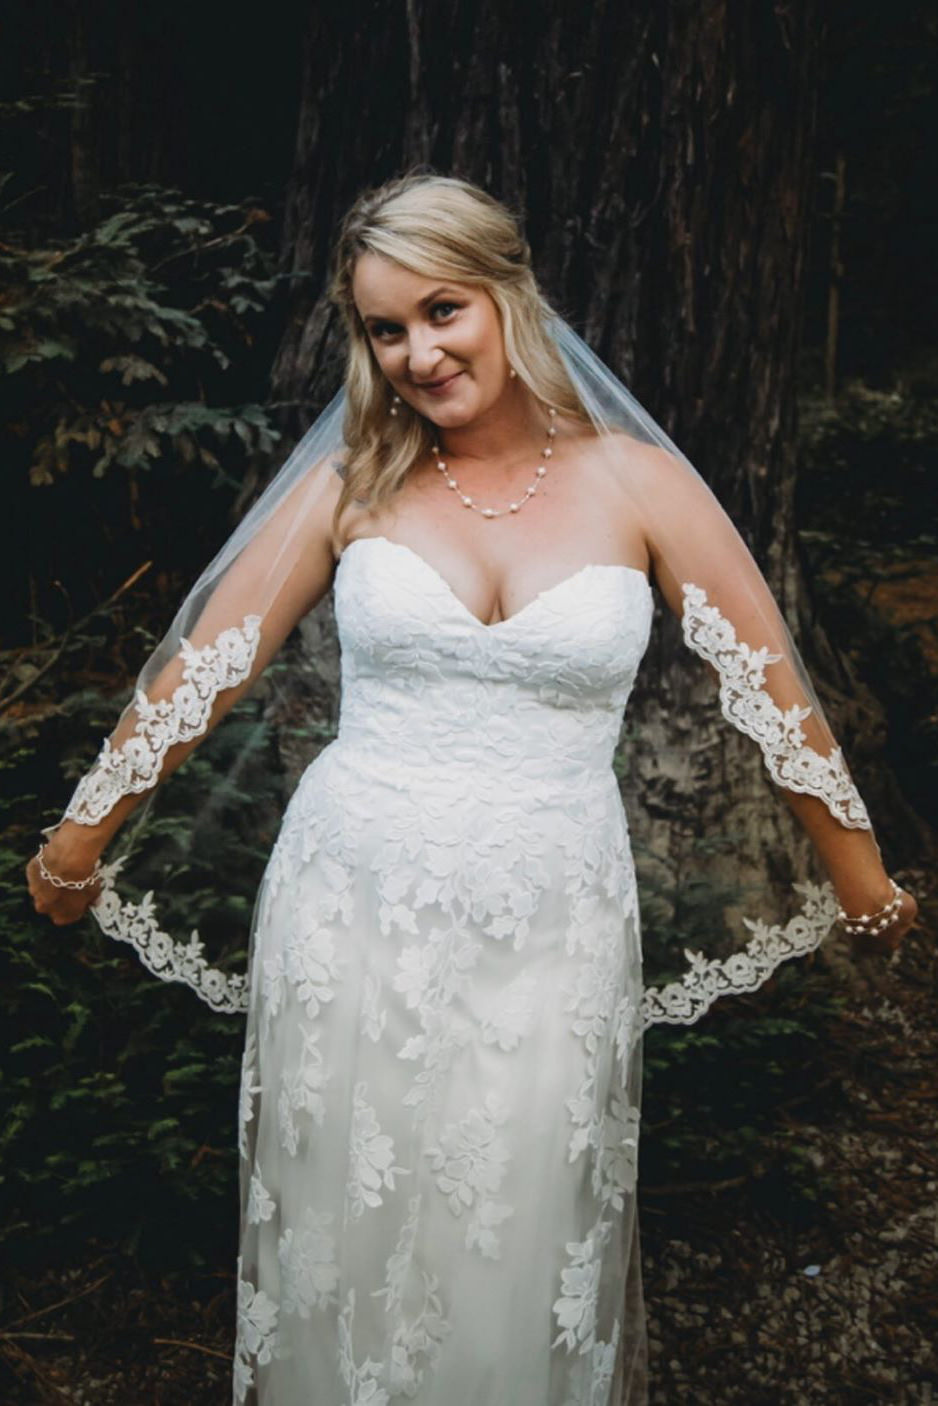 One Blushing Bride Simple Fingertip Length Wedding Veil, Soft Single Tier Bridal Veils Light Ivory / 38-40 Inches